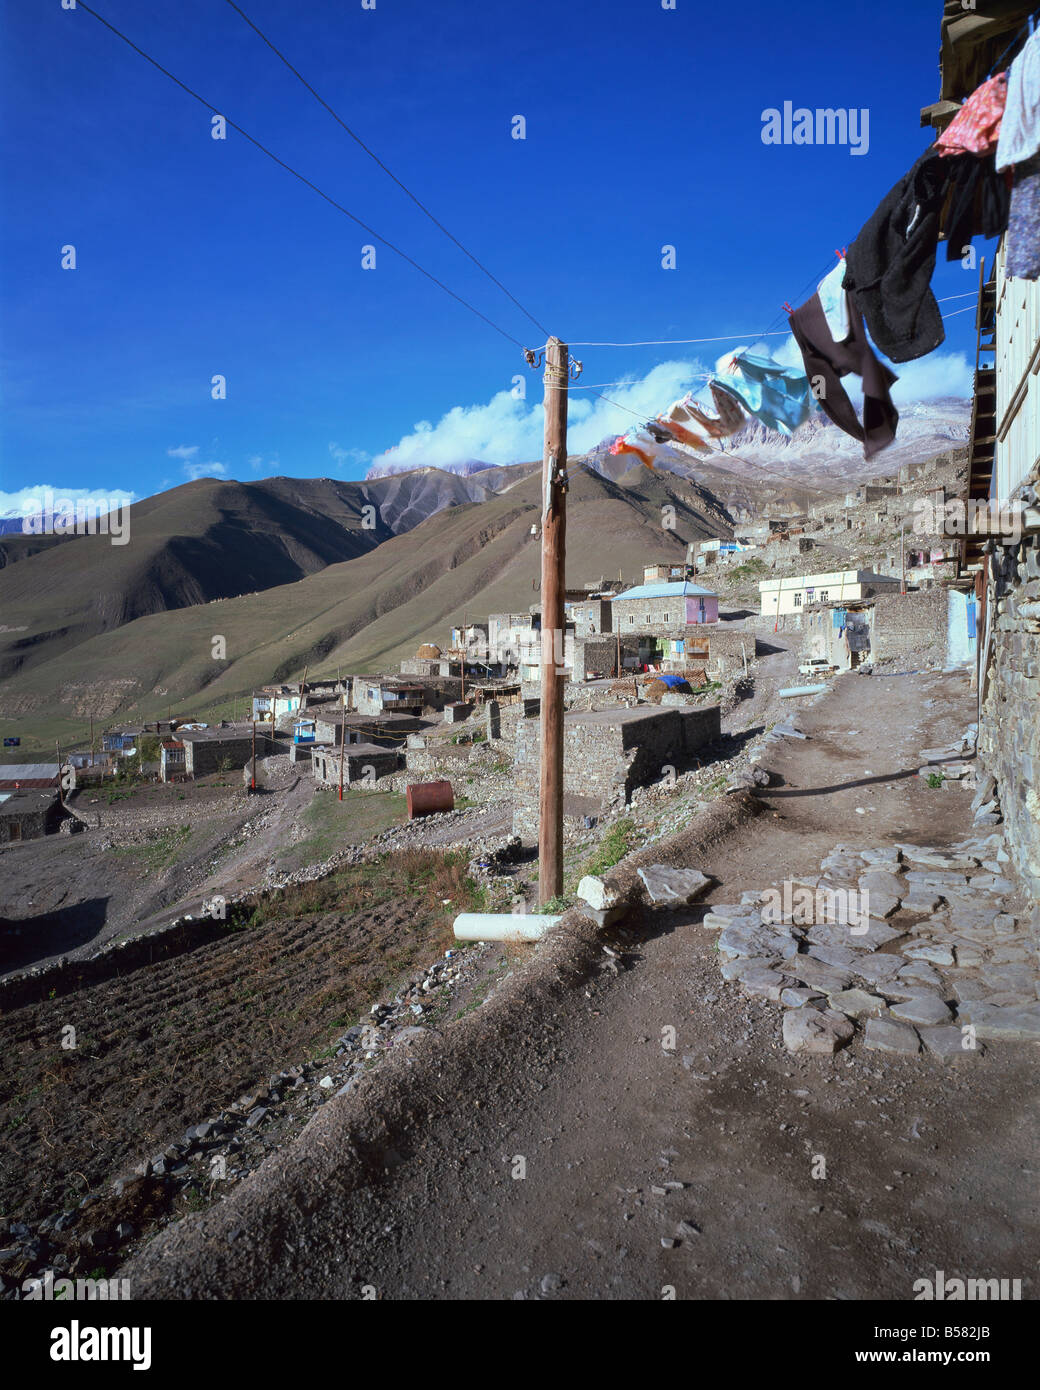 Entfernten Dorf Xinaliq im Caucus Berge, Aserbaidschan, Zentral-Asien, Asien Stockfoto